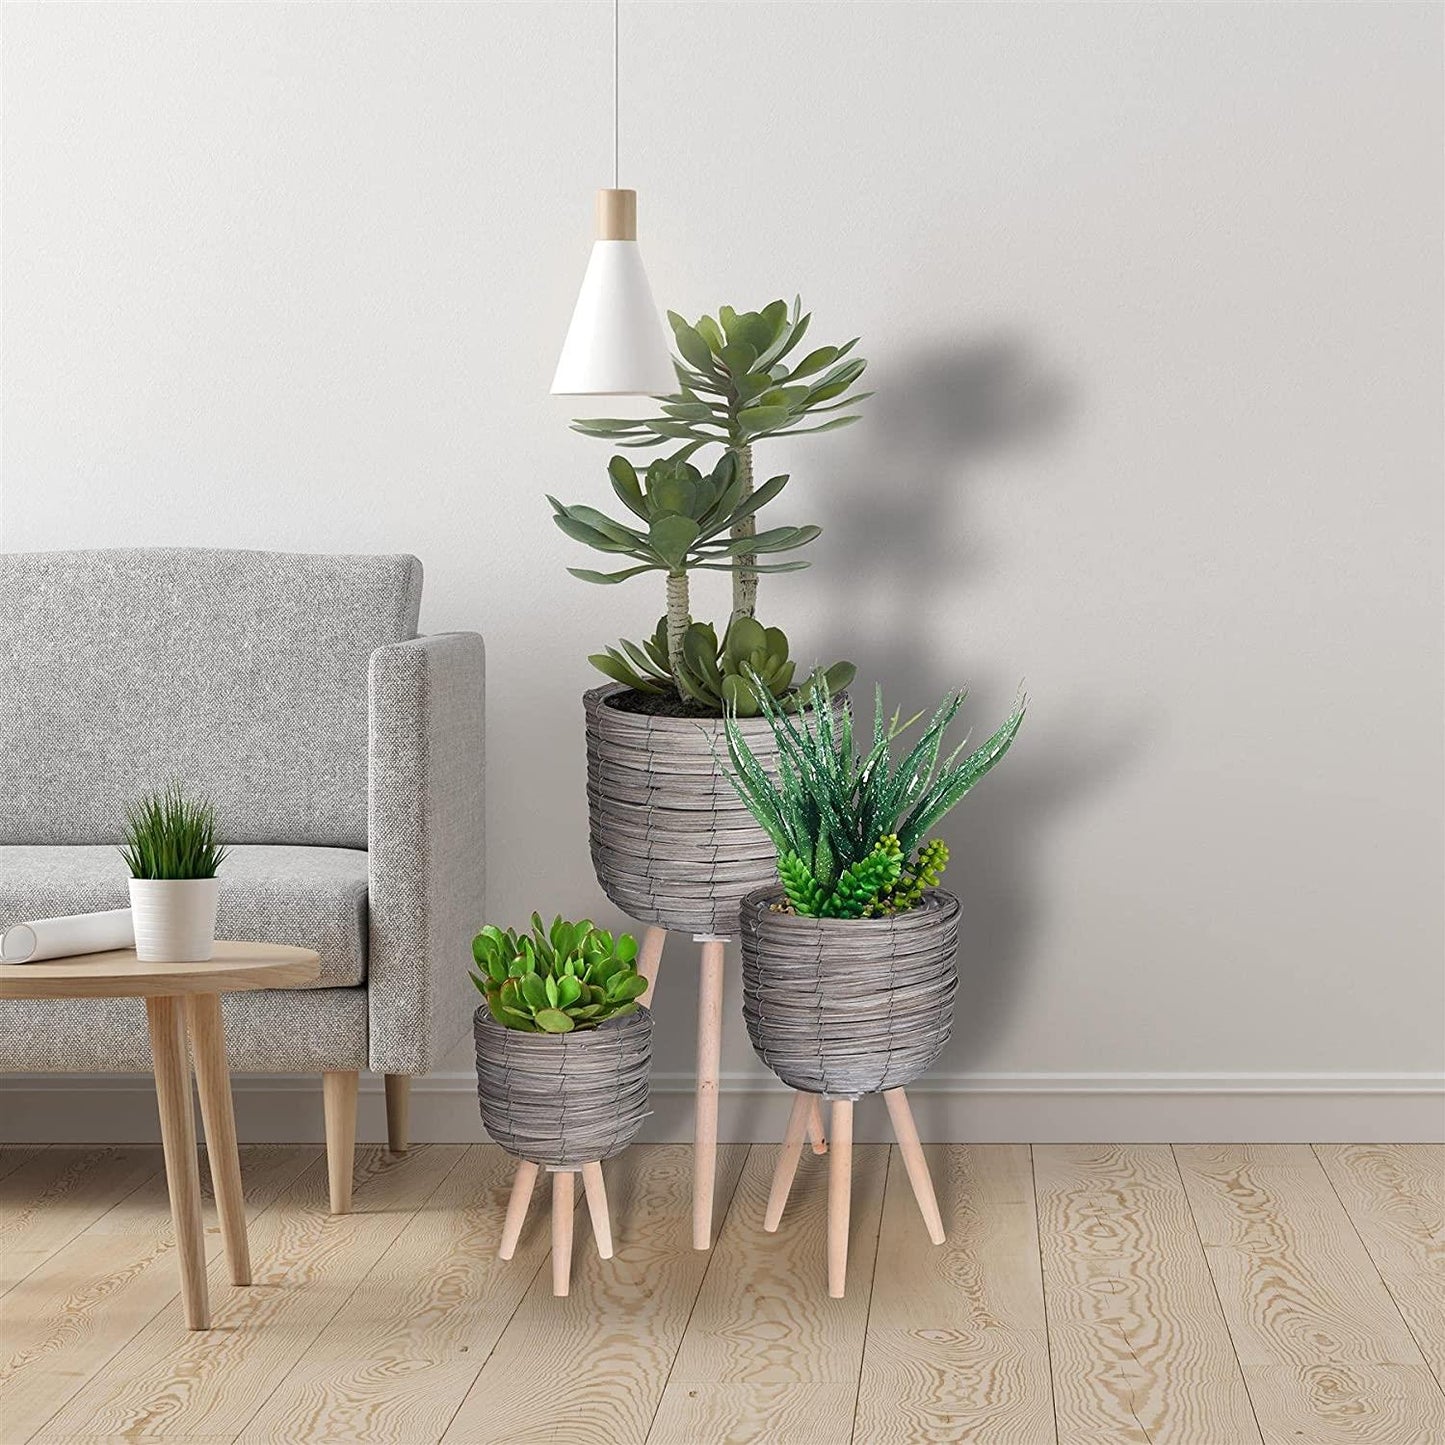 Set of 3 Indoor Plant Pots Wooden Woven Home Decor